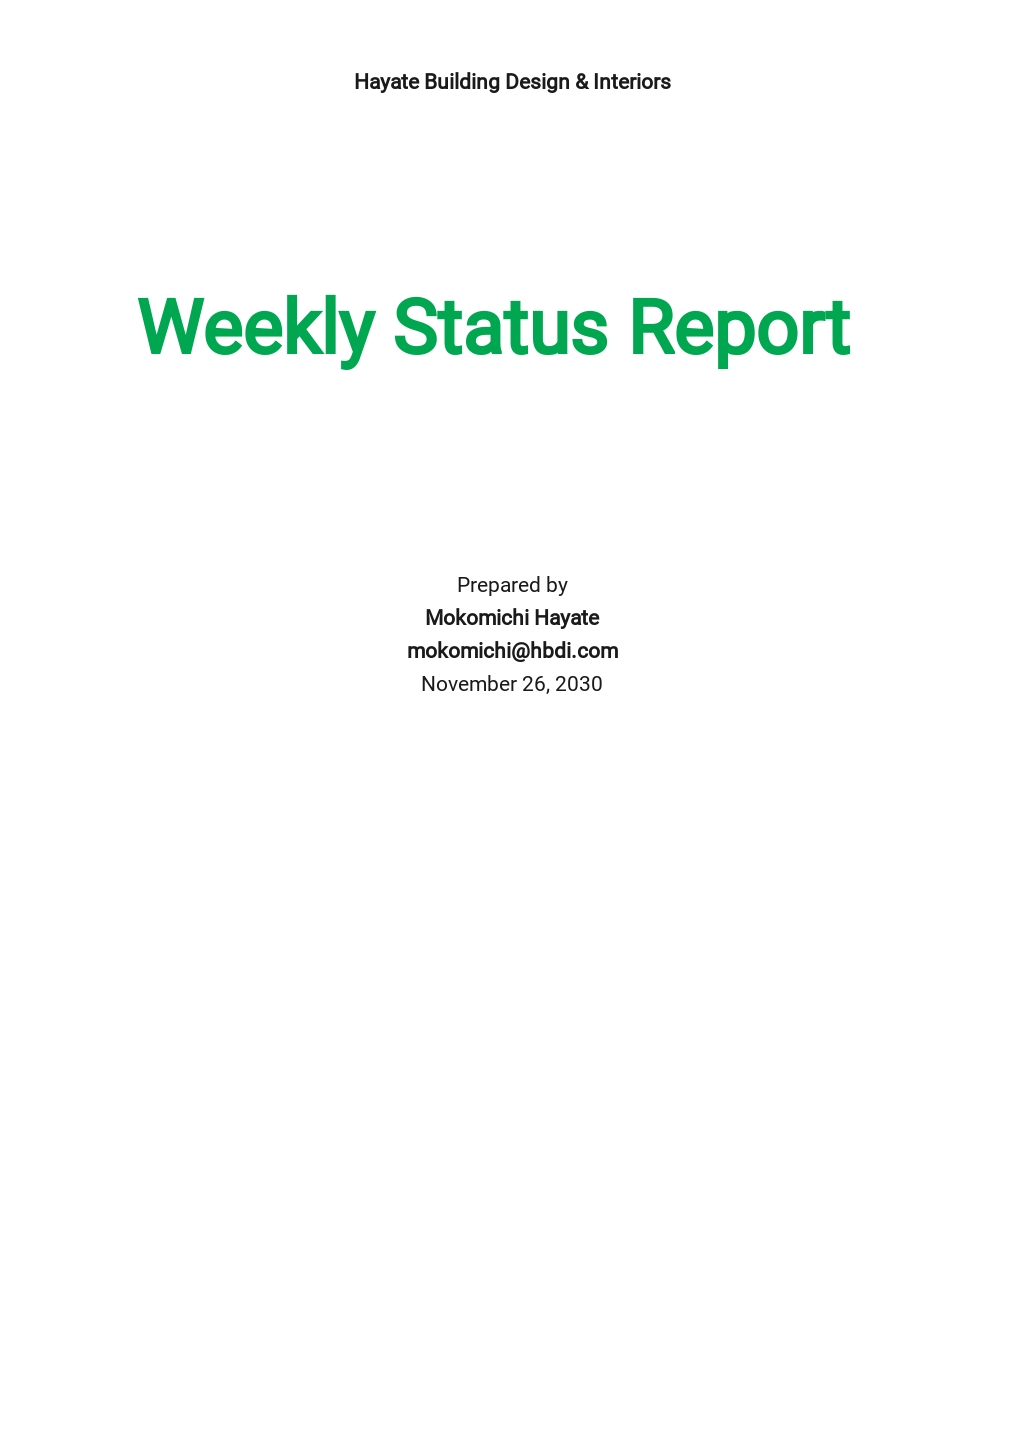 Free Sample Weekly Status Report Template.jpe